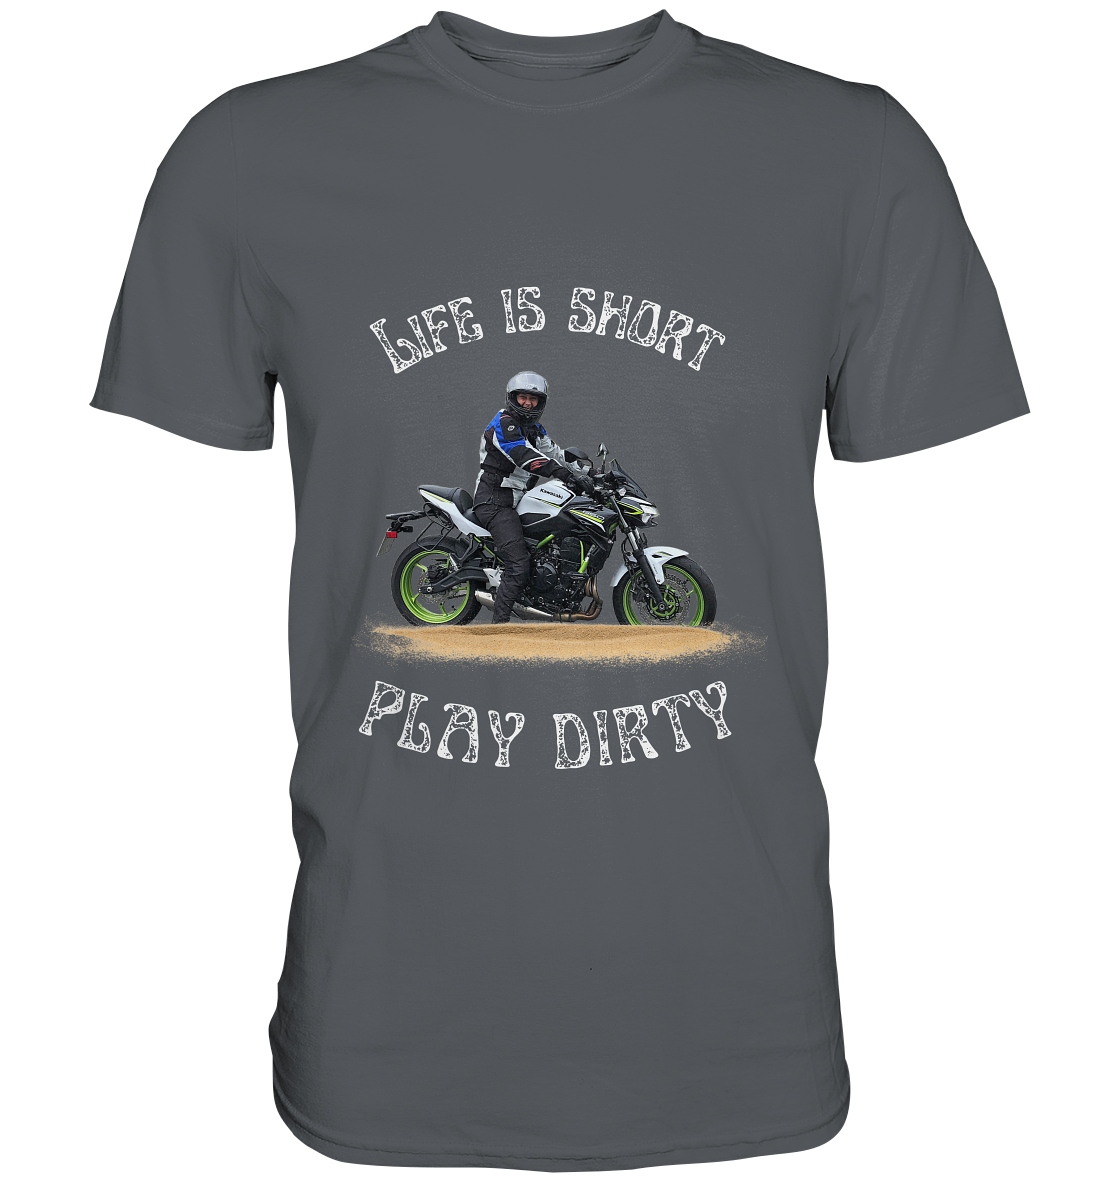 "Life is short - play dirty" | Herren-Shirt in hellem Design